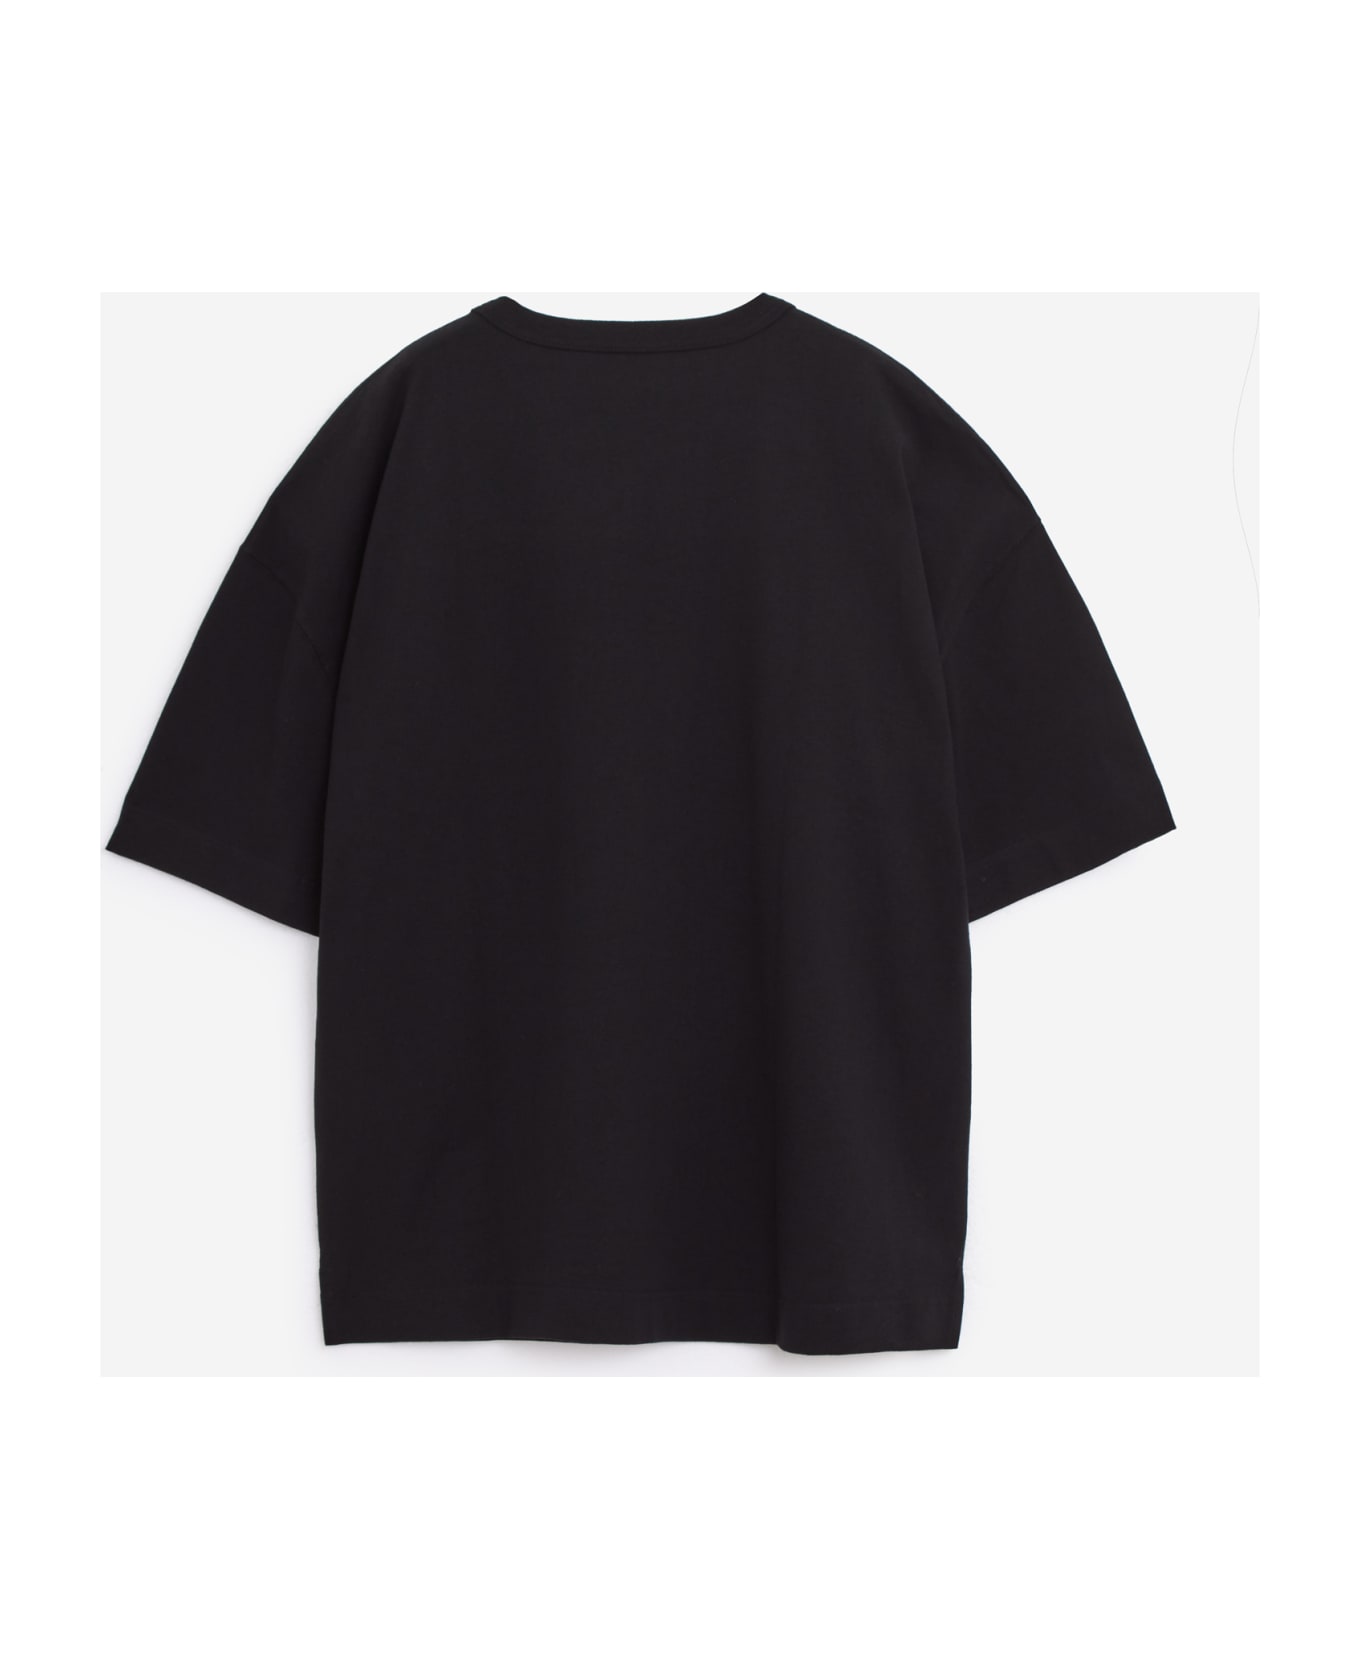 Lemaire Boxy T-shirt T-shirt - black